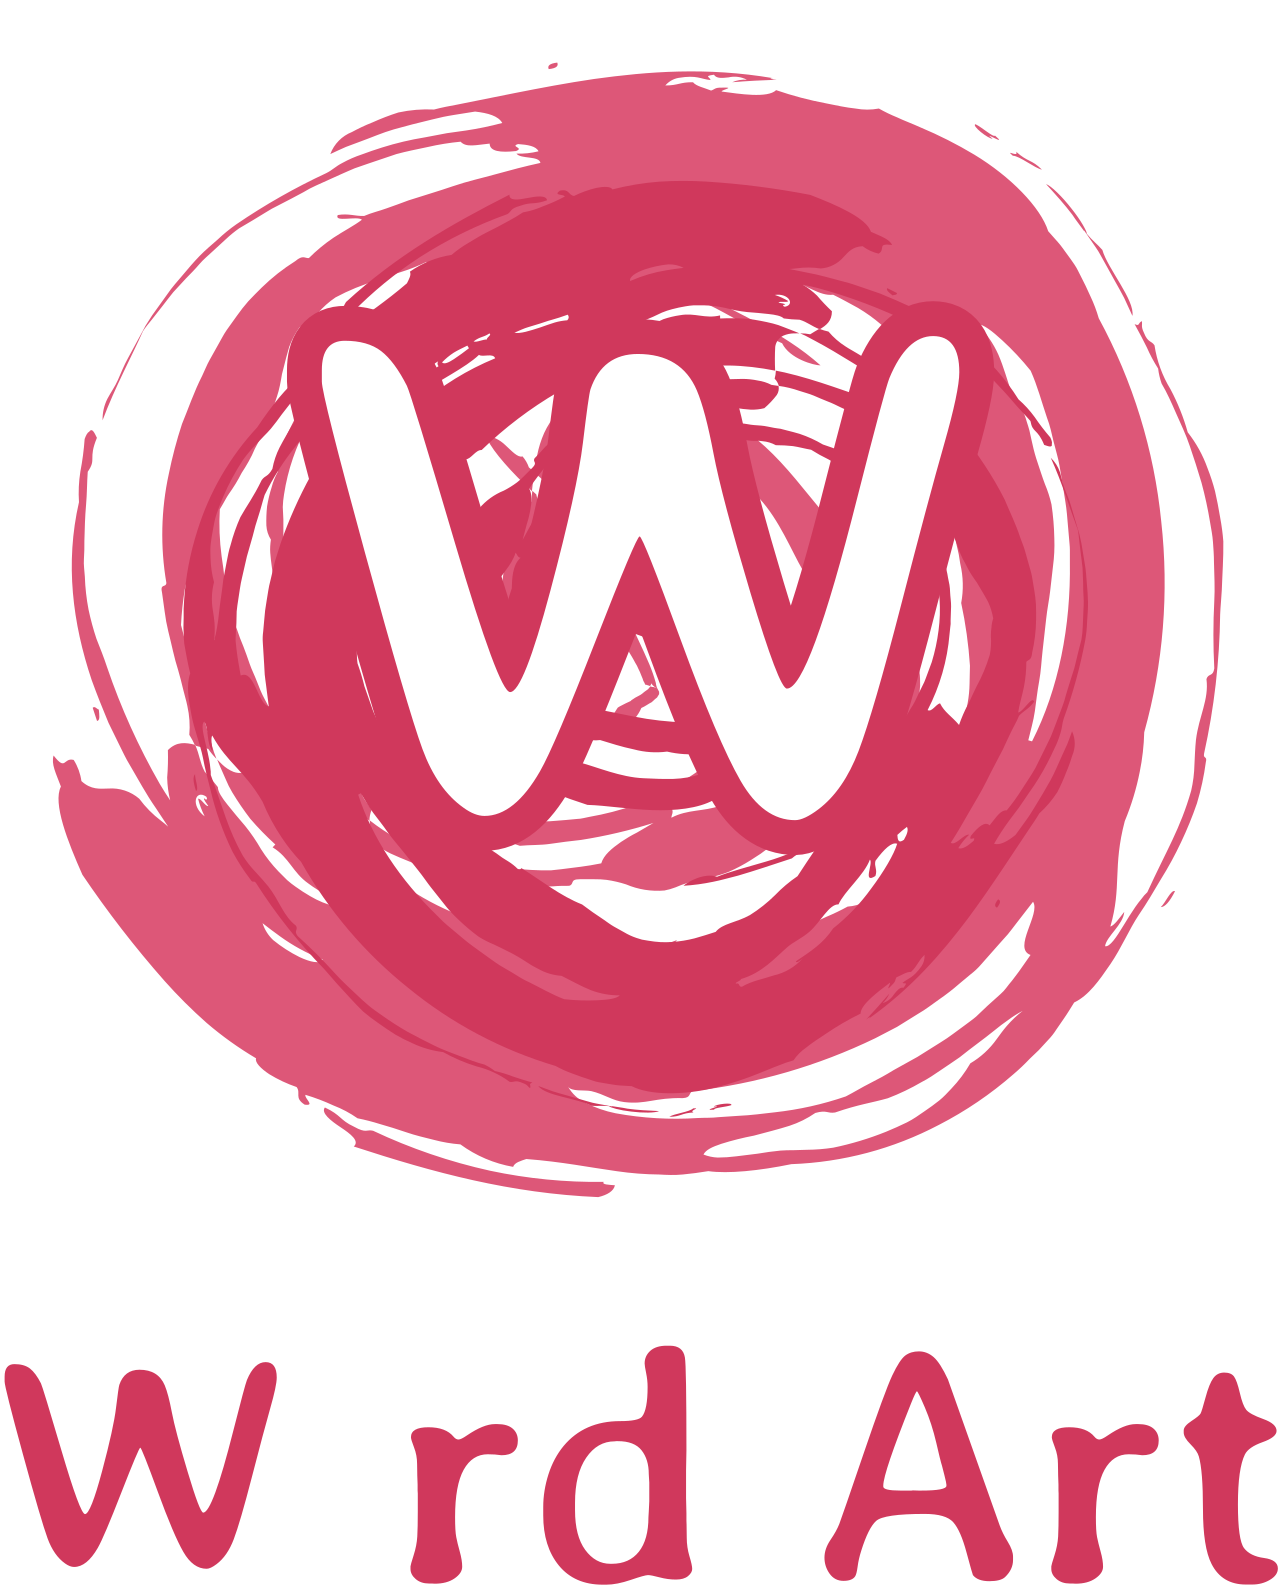 W rd Art's web page